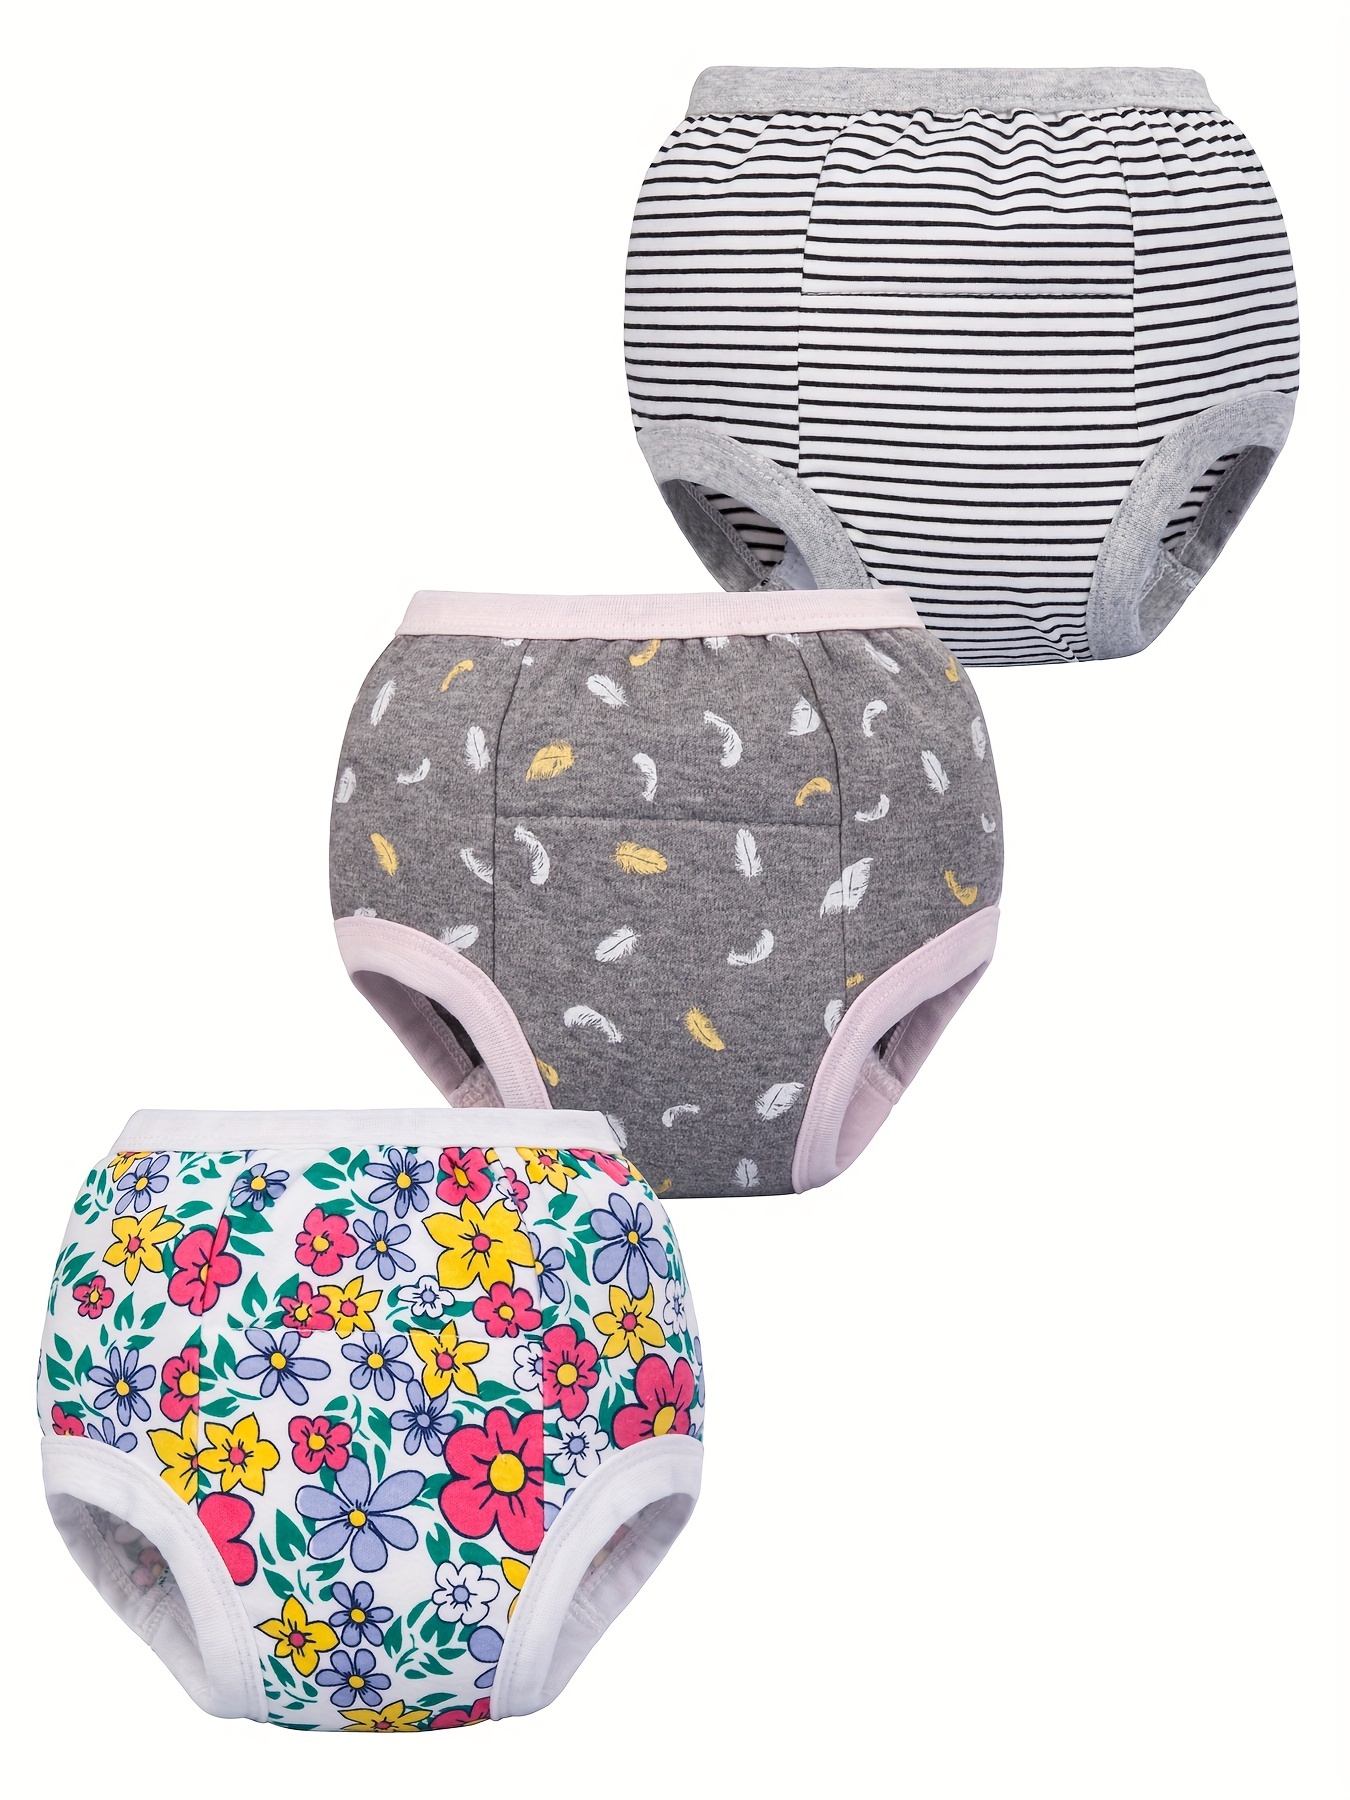 Baby Waterproof Pull up Potty Training Unisex Padded Underwear